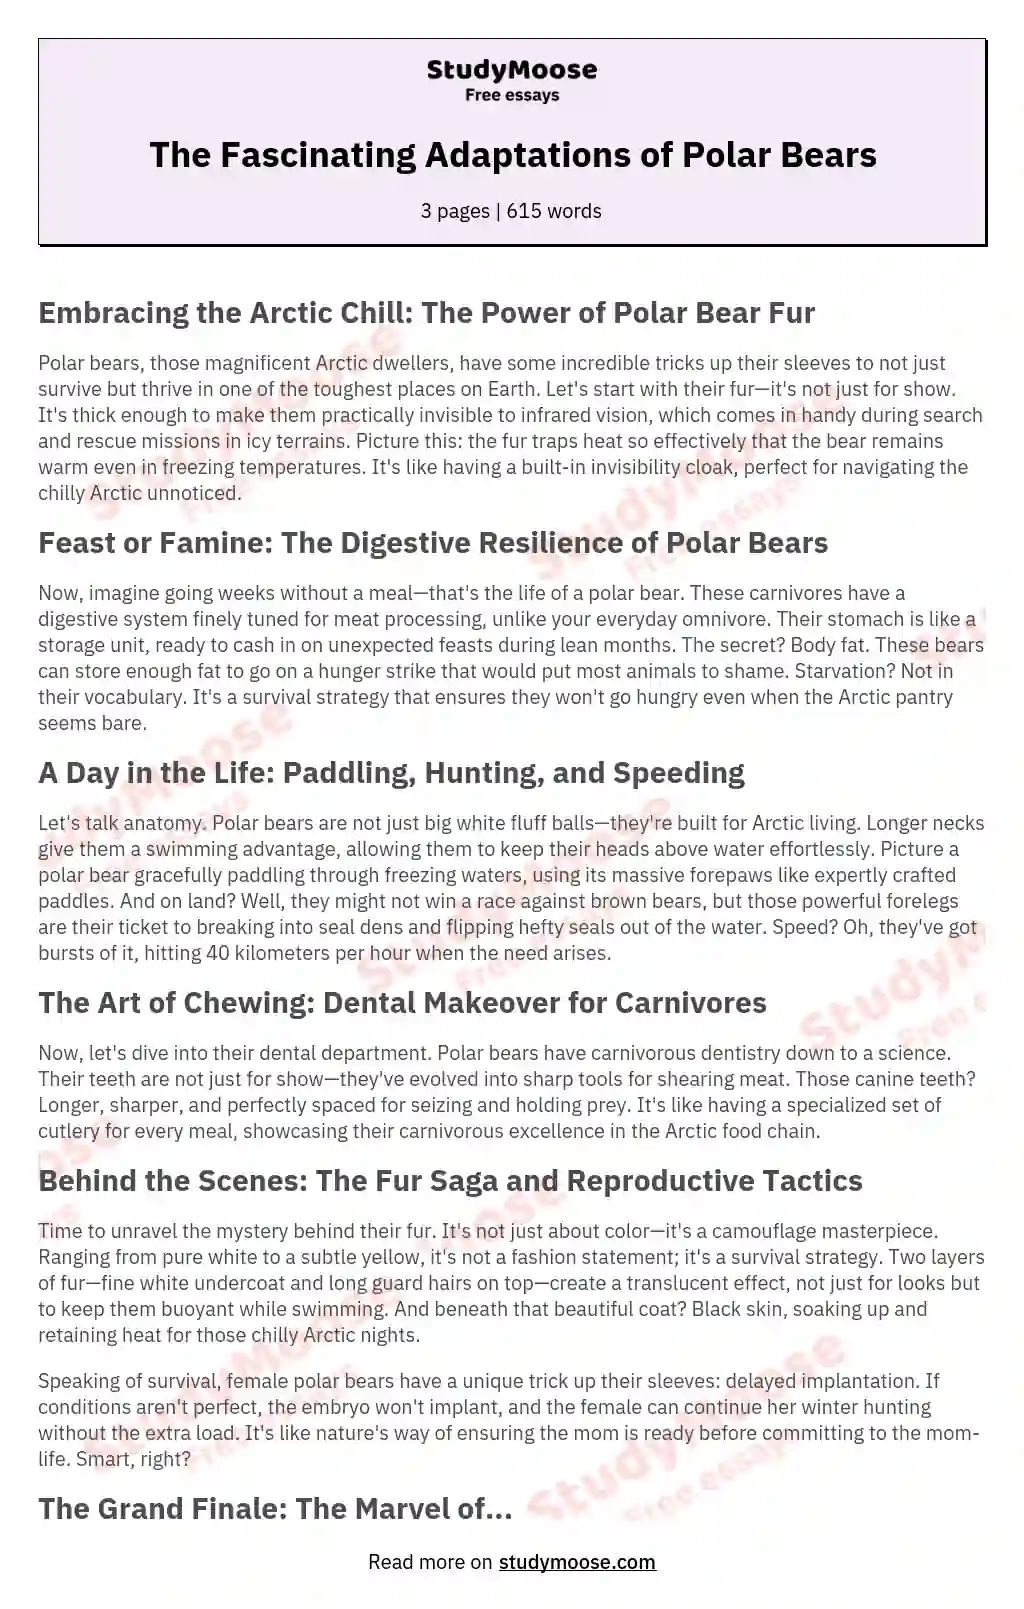 The Fascinating Adaptations of Polar Bears essay